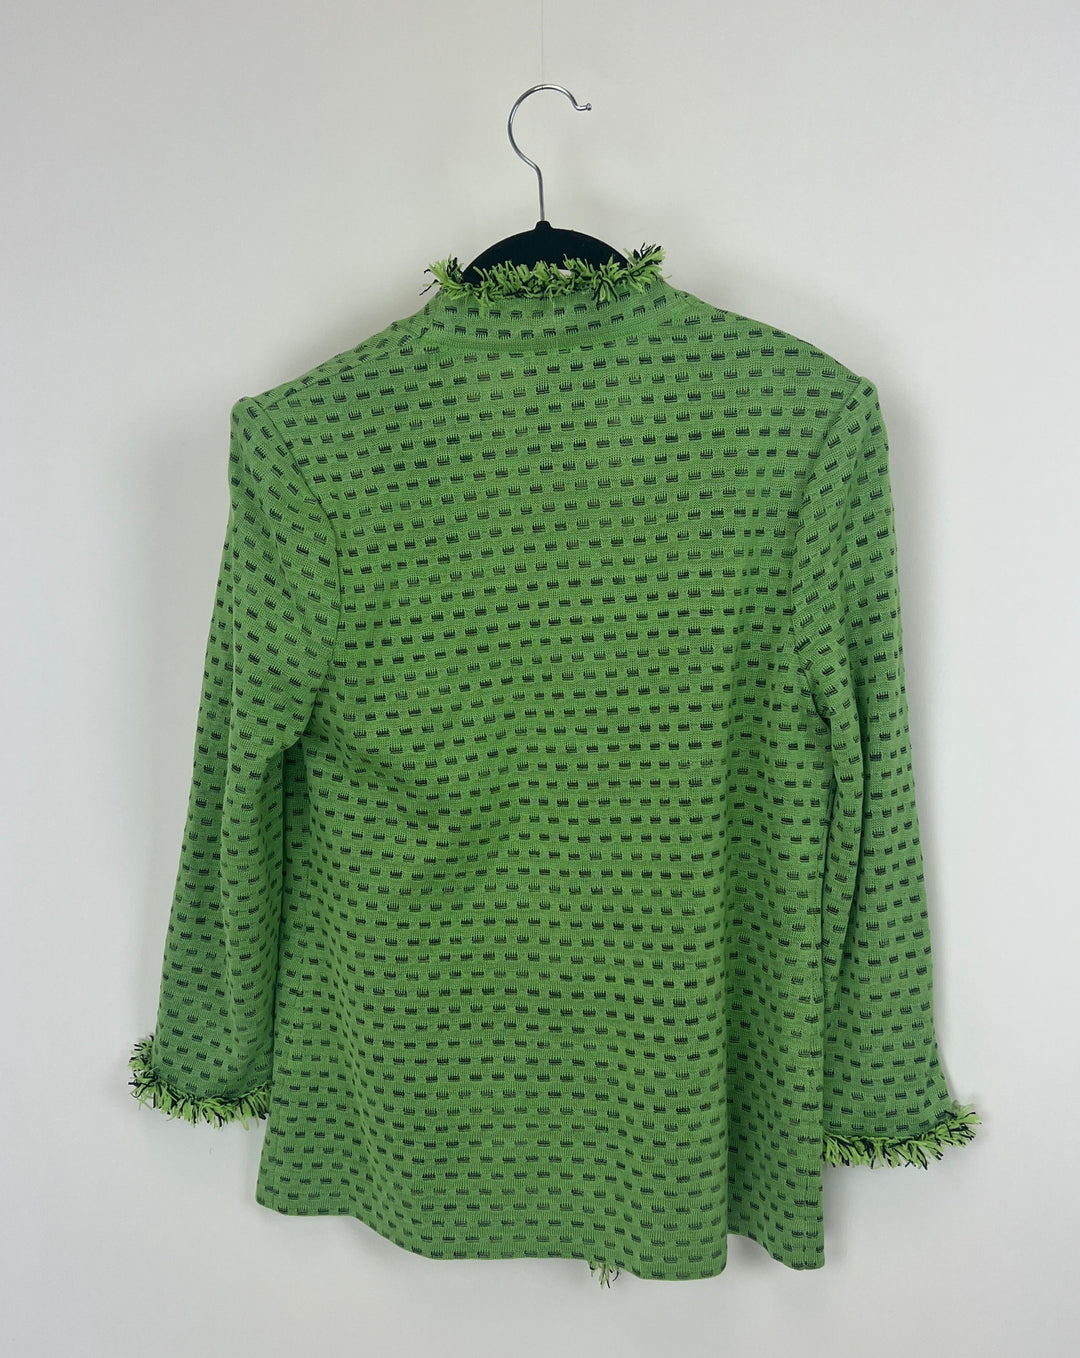 Green Frayed Cardigan - Size 2-4